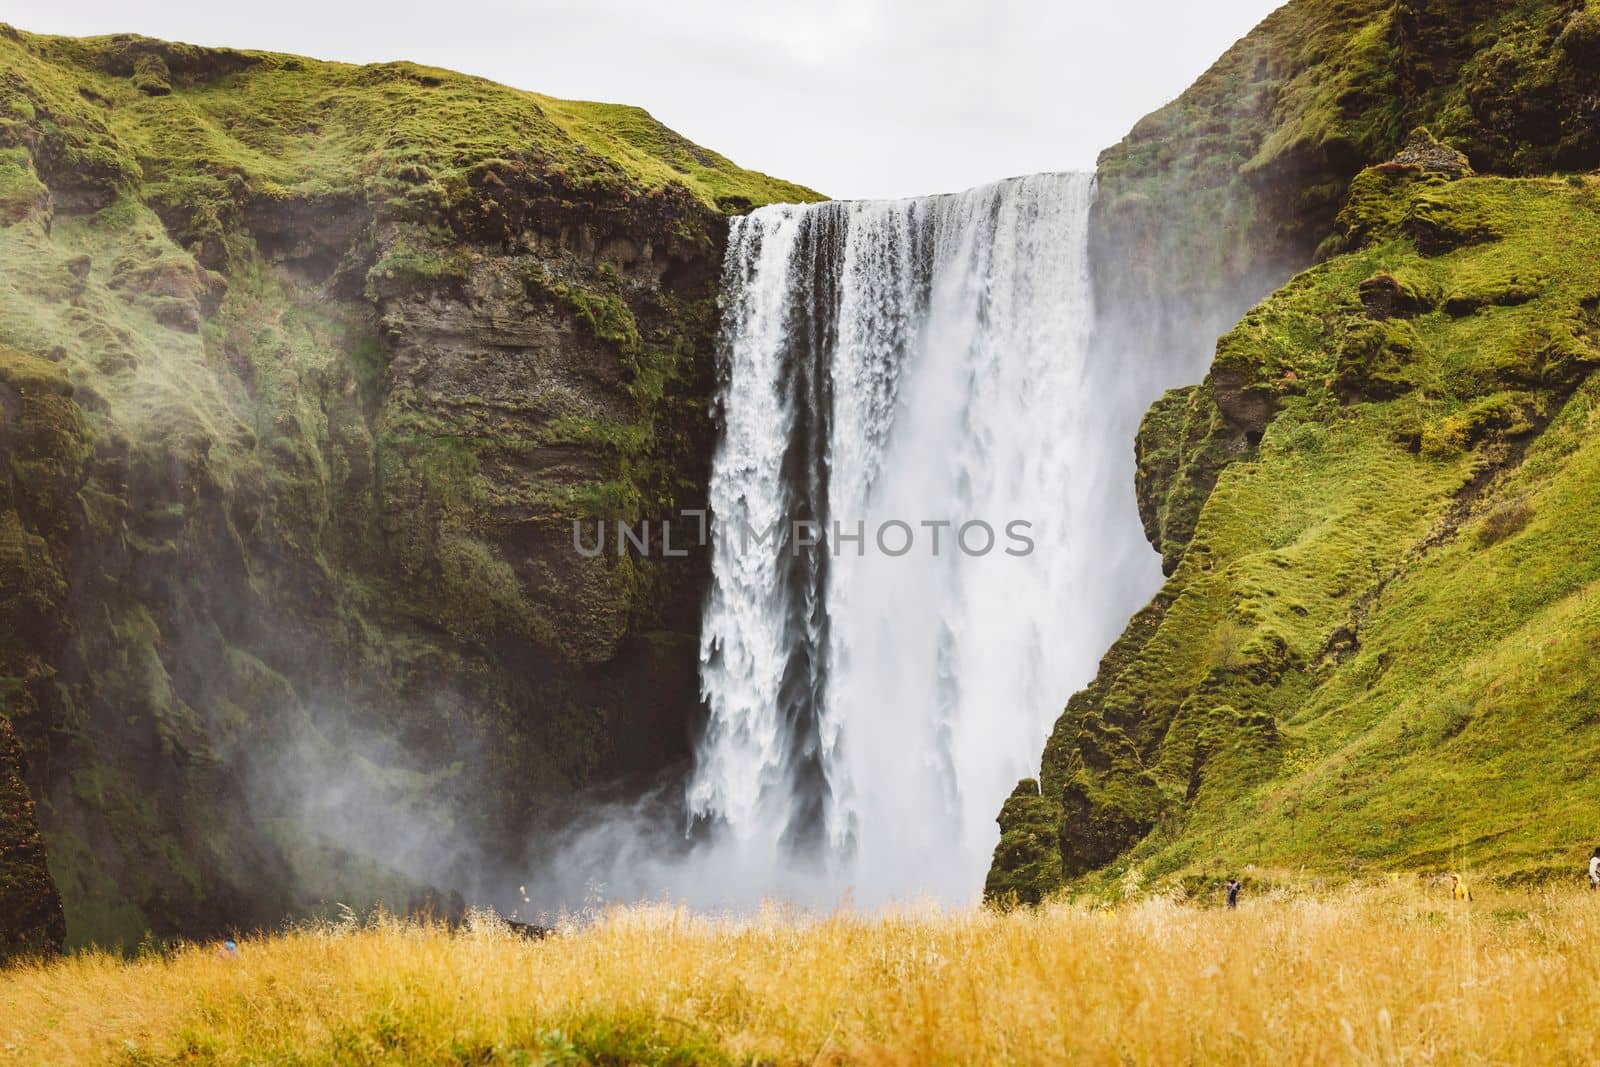 Famous Skogafoss waterfall on Skoga river. Iceland, Europe. Landscape photography. High quality photo